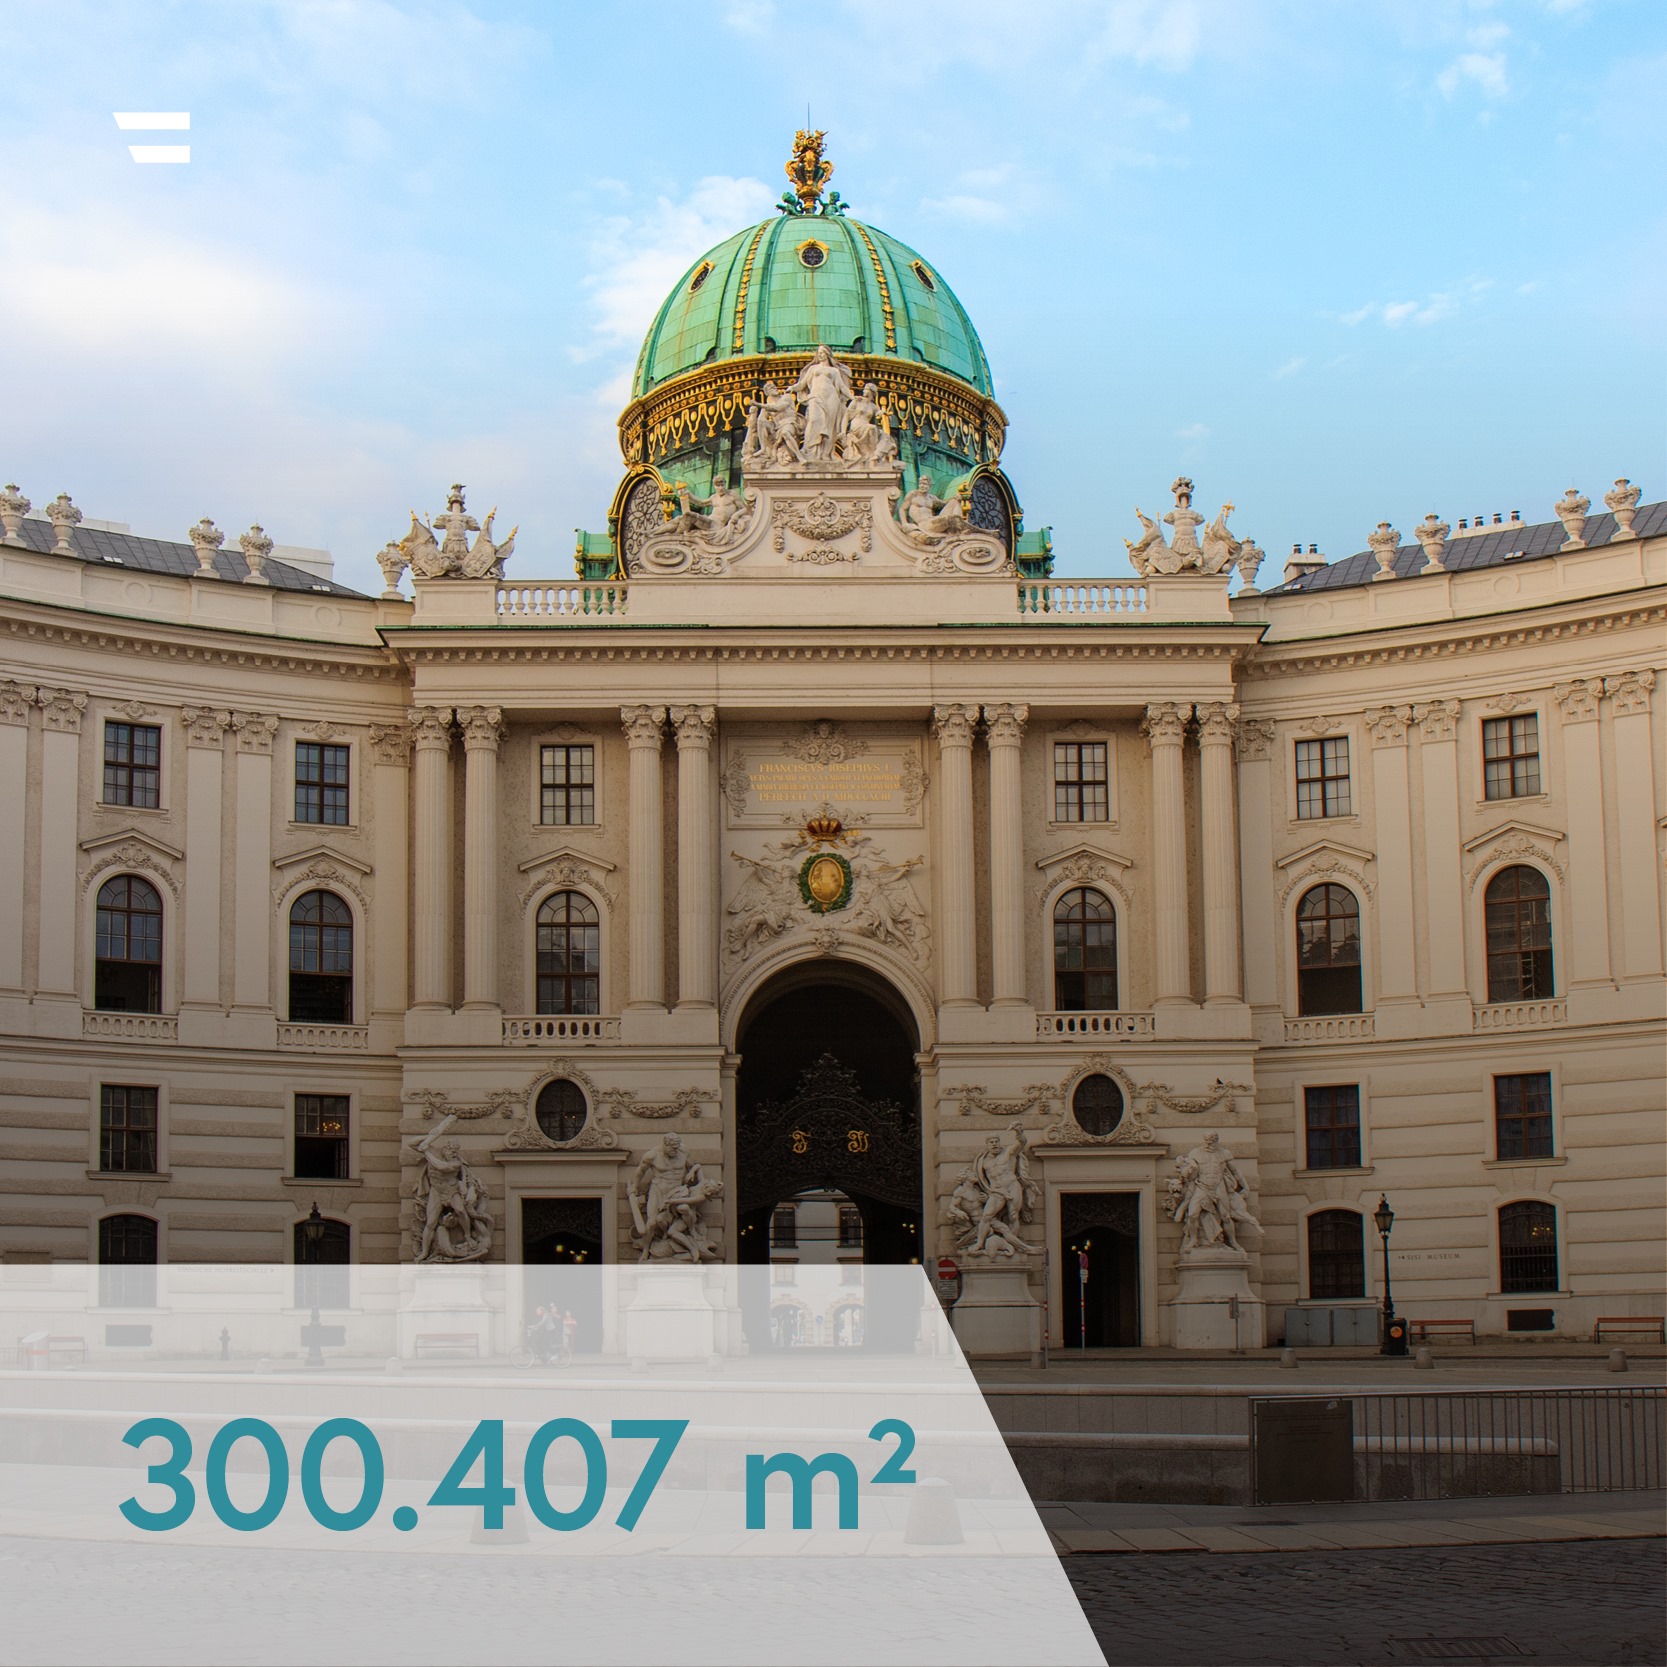 300.407 Squaremeters HofburgWien